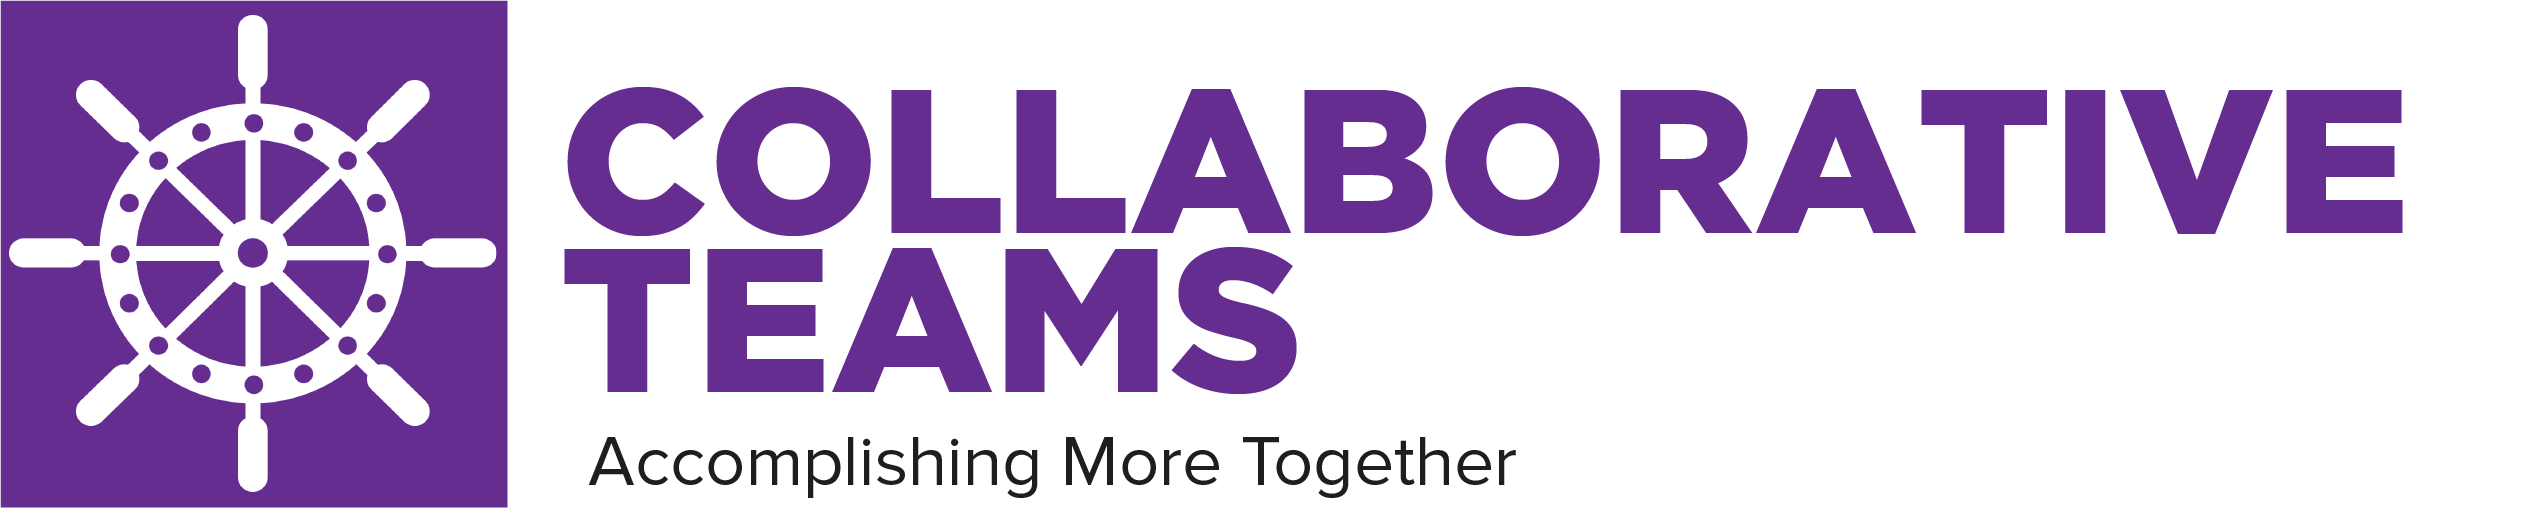 Collaborative Teams Logo V1